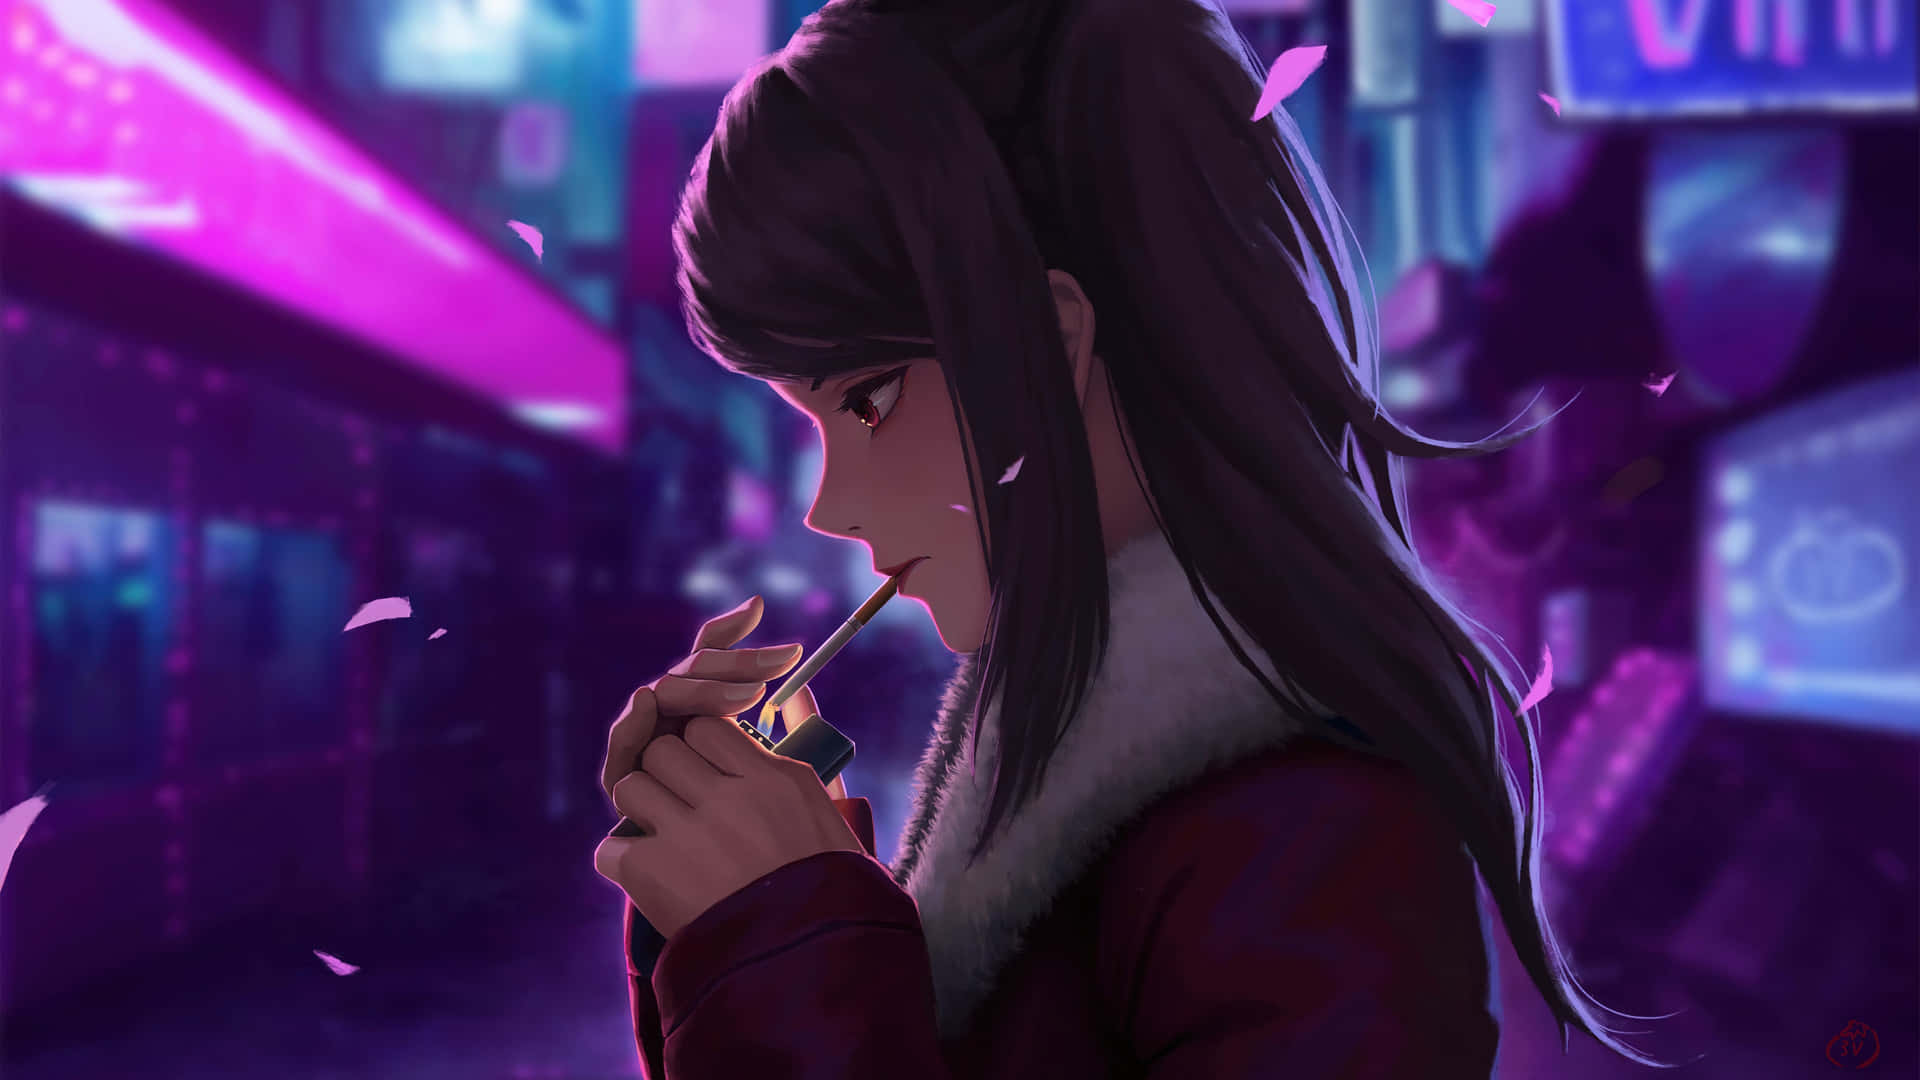 Jacket Anime Girl Smoking